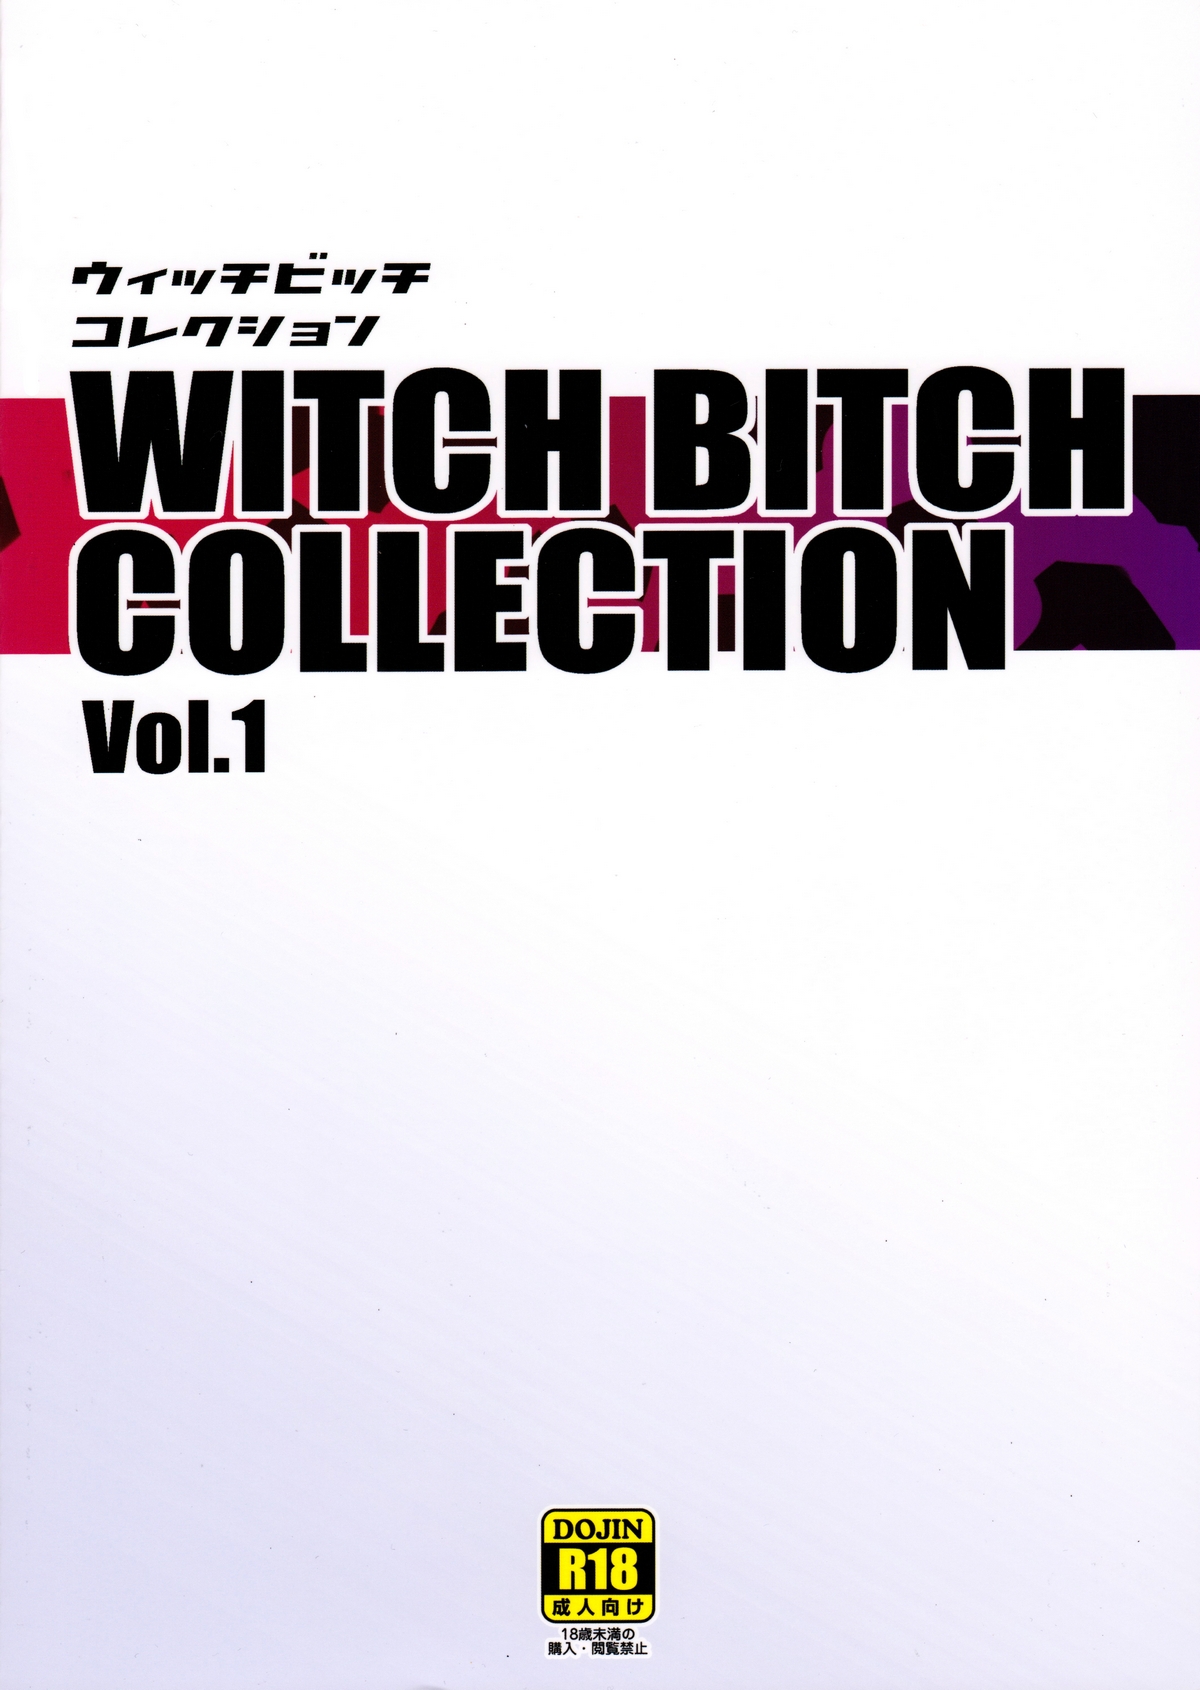 (C89) [フニフニラボ (たまごろー)] Witch Bitch Collection Vol.1 (フェアリーテイル)